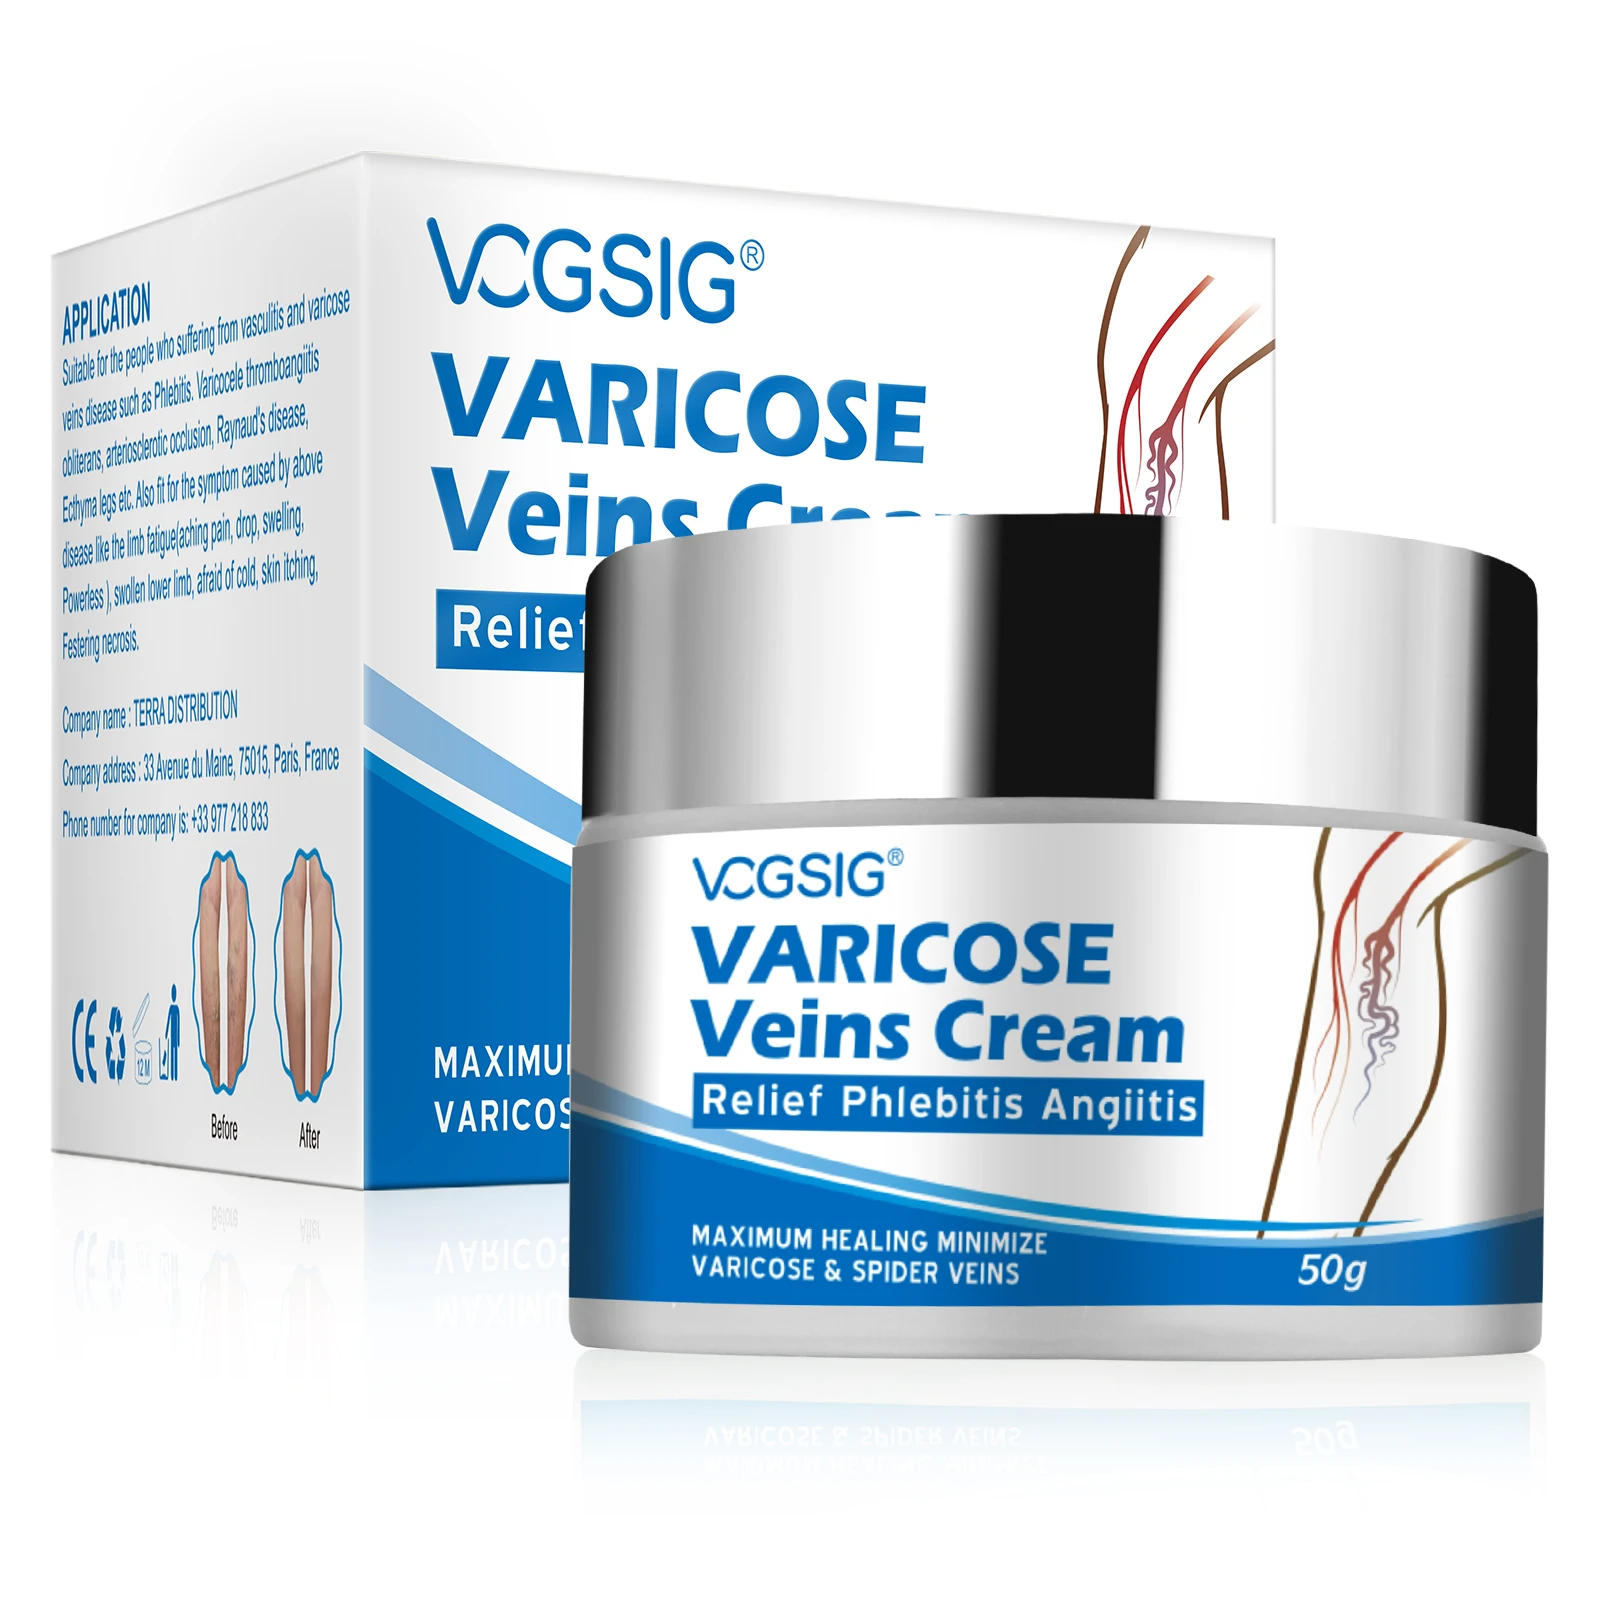 

VOGSIG Custom Safety Mildness Natural Ingredients Vein Care Remover Promote Blood Circulation Varicose Veins Treatment Cream